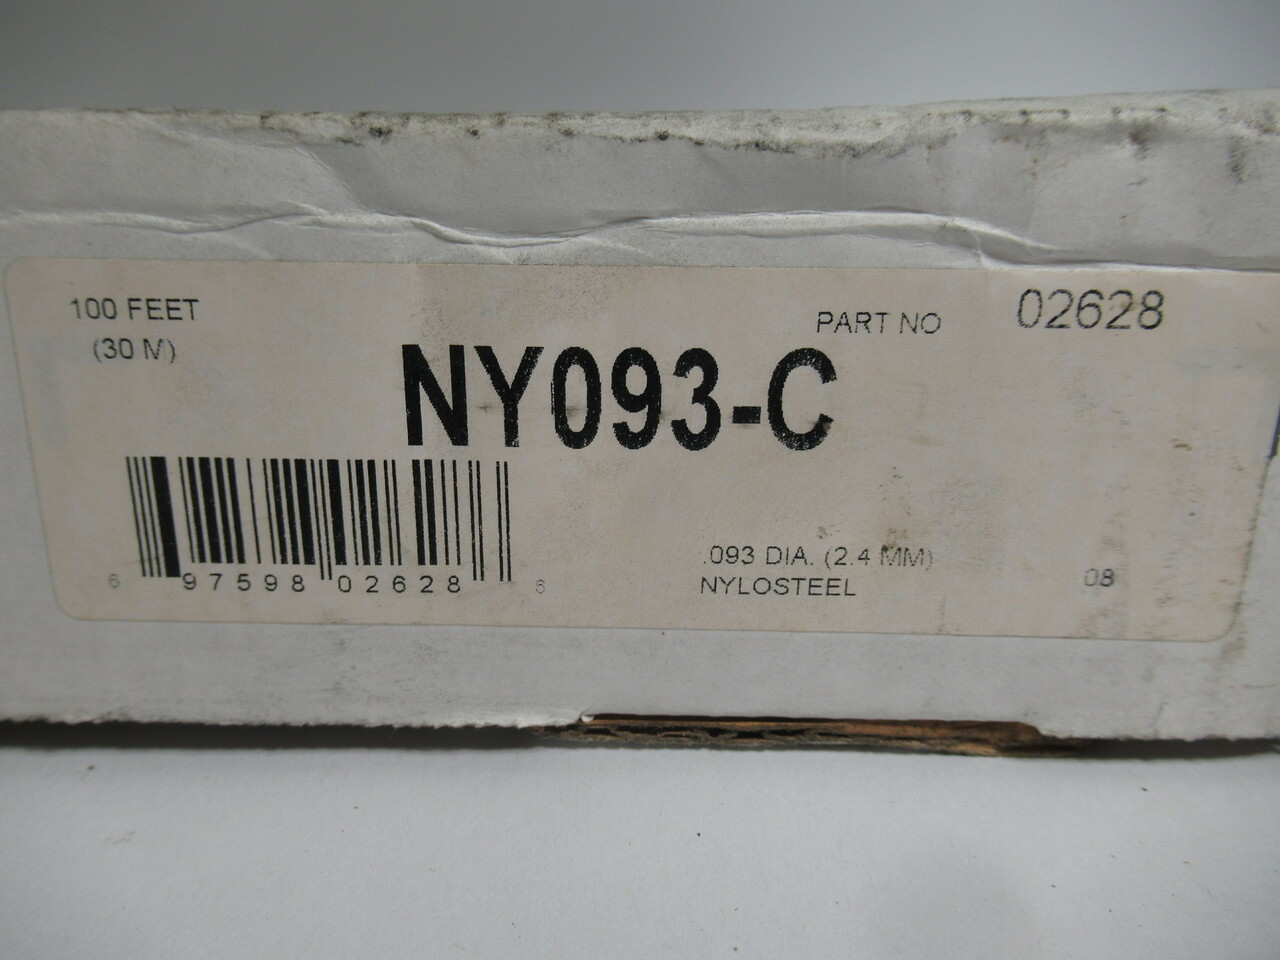 Flexco Clipper NY093-C 02628 Purple Hinge Pin Cable .093" (2.4mm) 9.6m *Cut* NEW